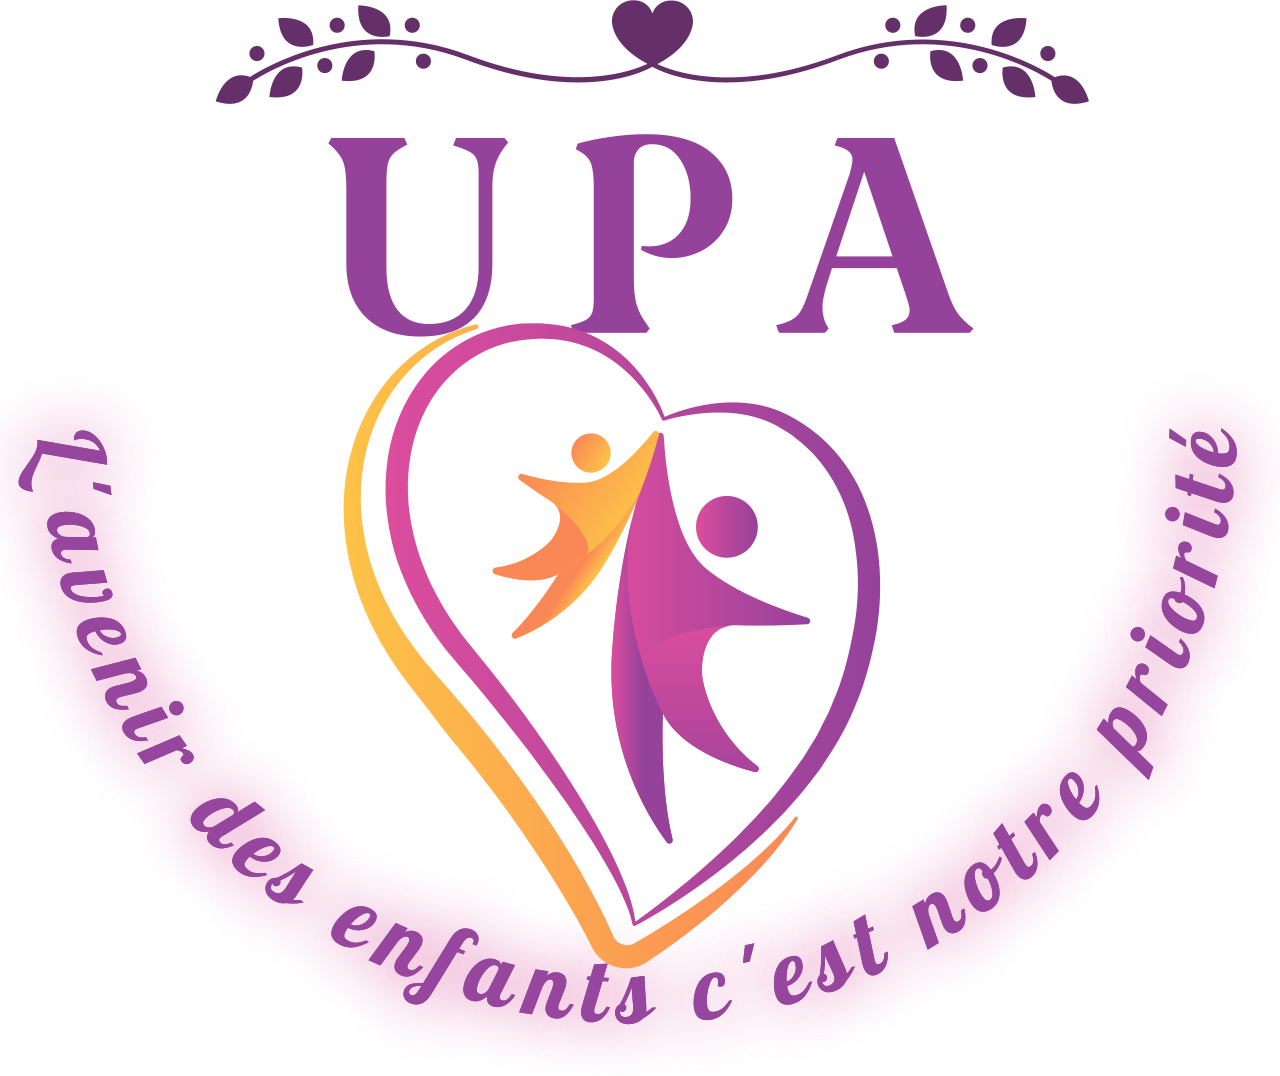 UPA 's web page